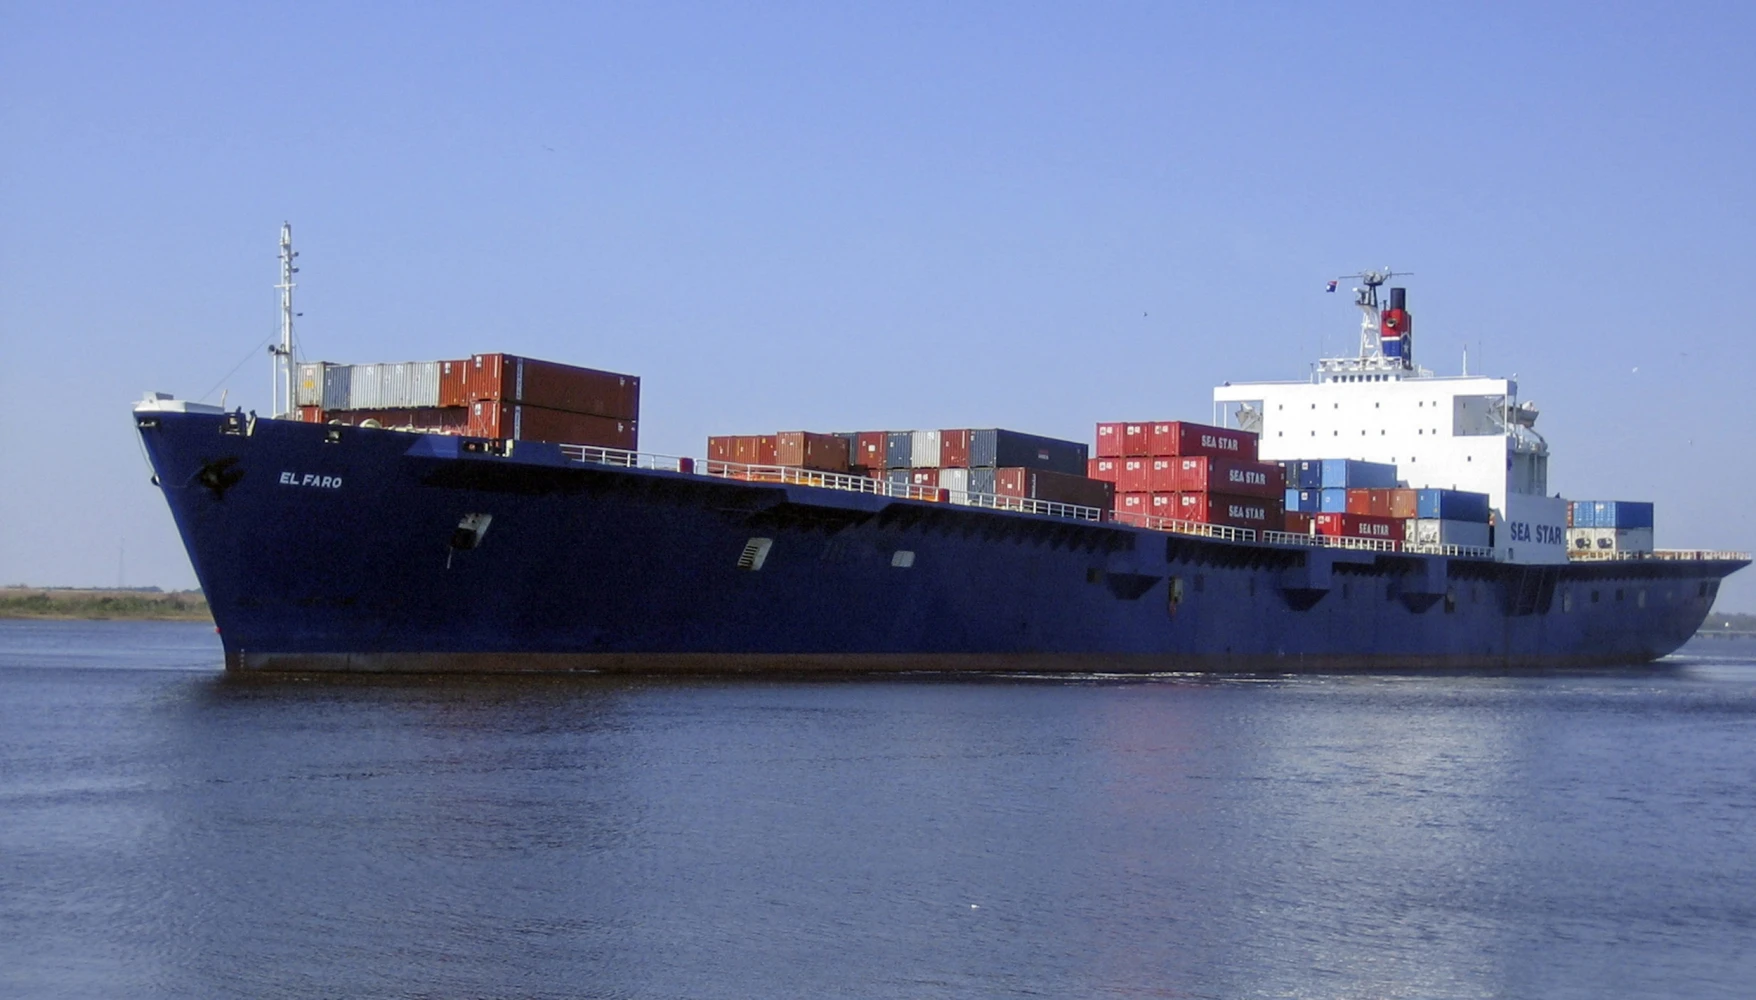 The container ship El Faro sank when it encountered Hurricane Joaquin on October 1, 2015